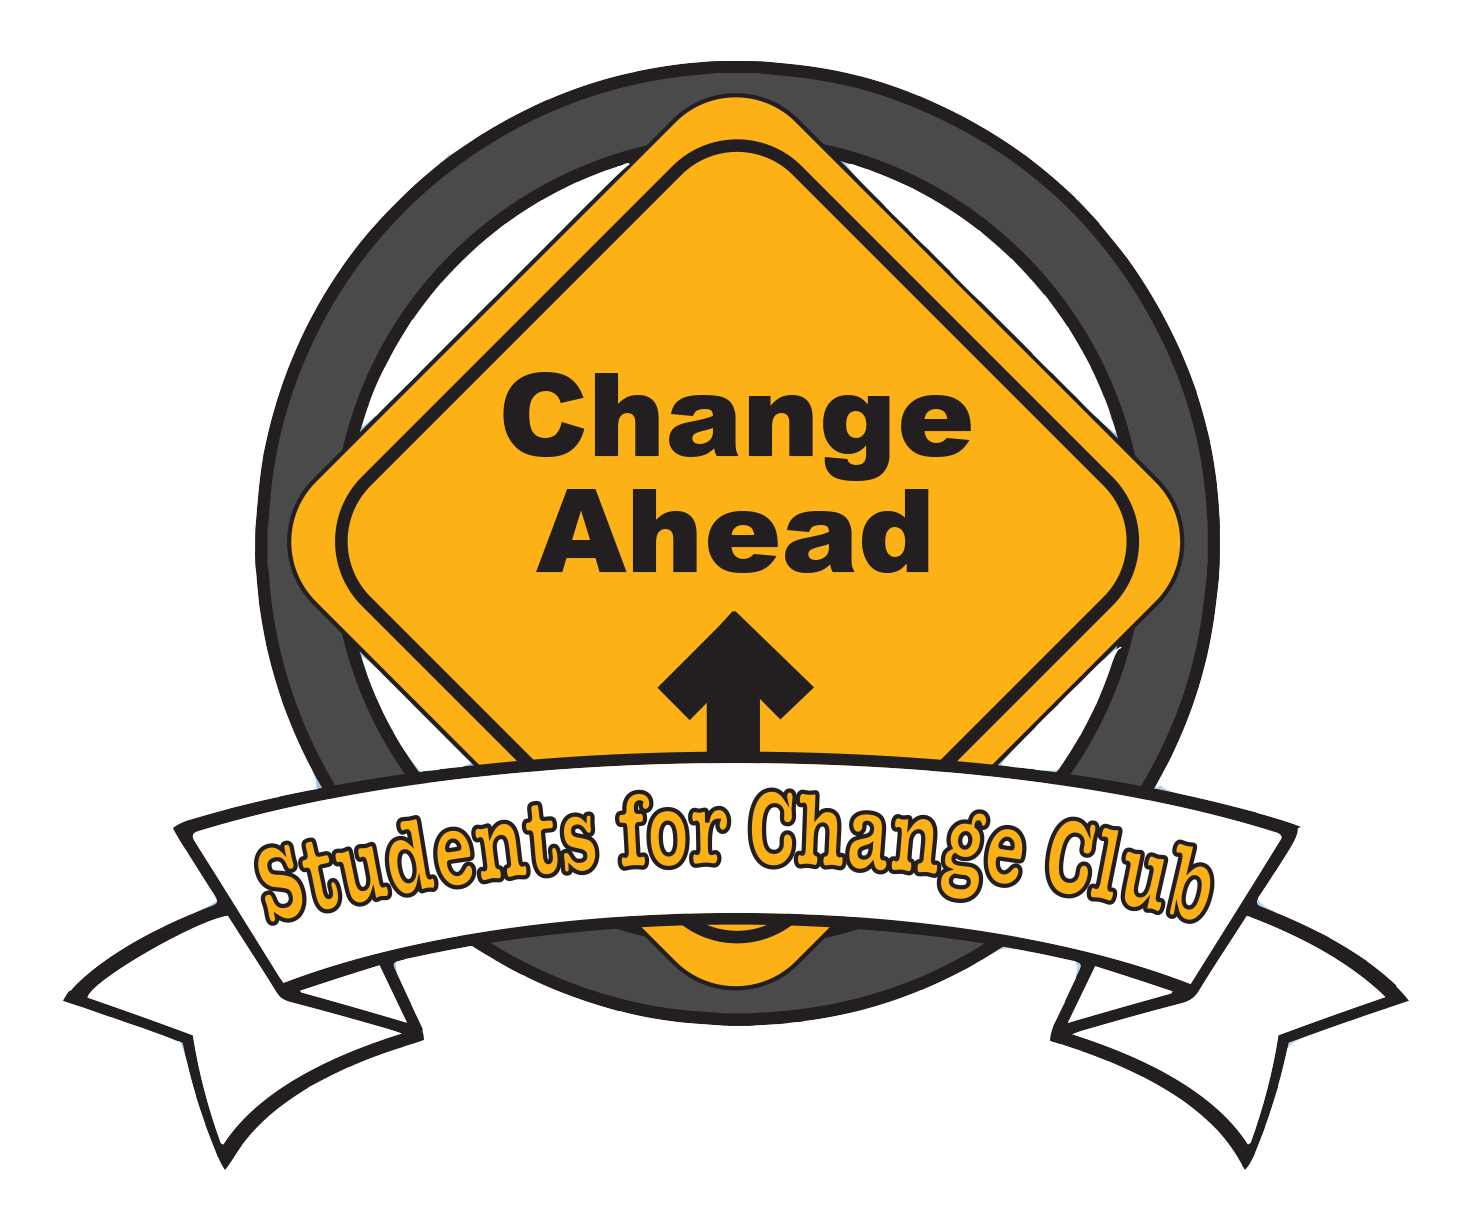 Change Ahead  - Students for change club logo